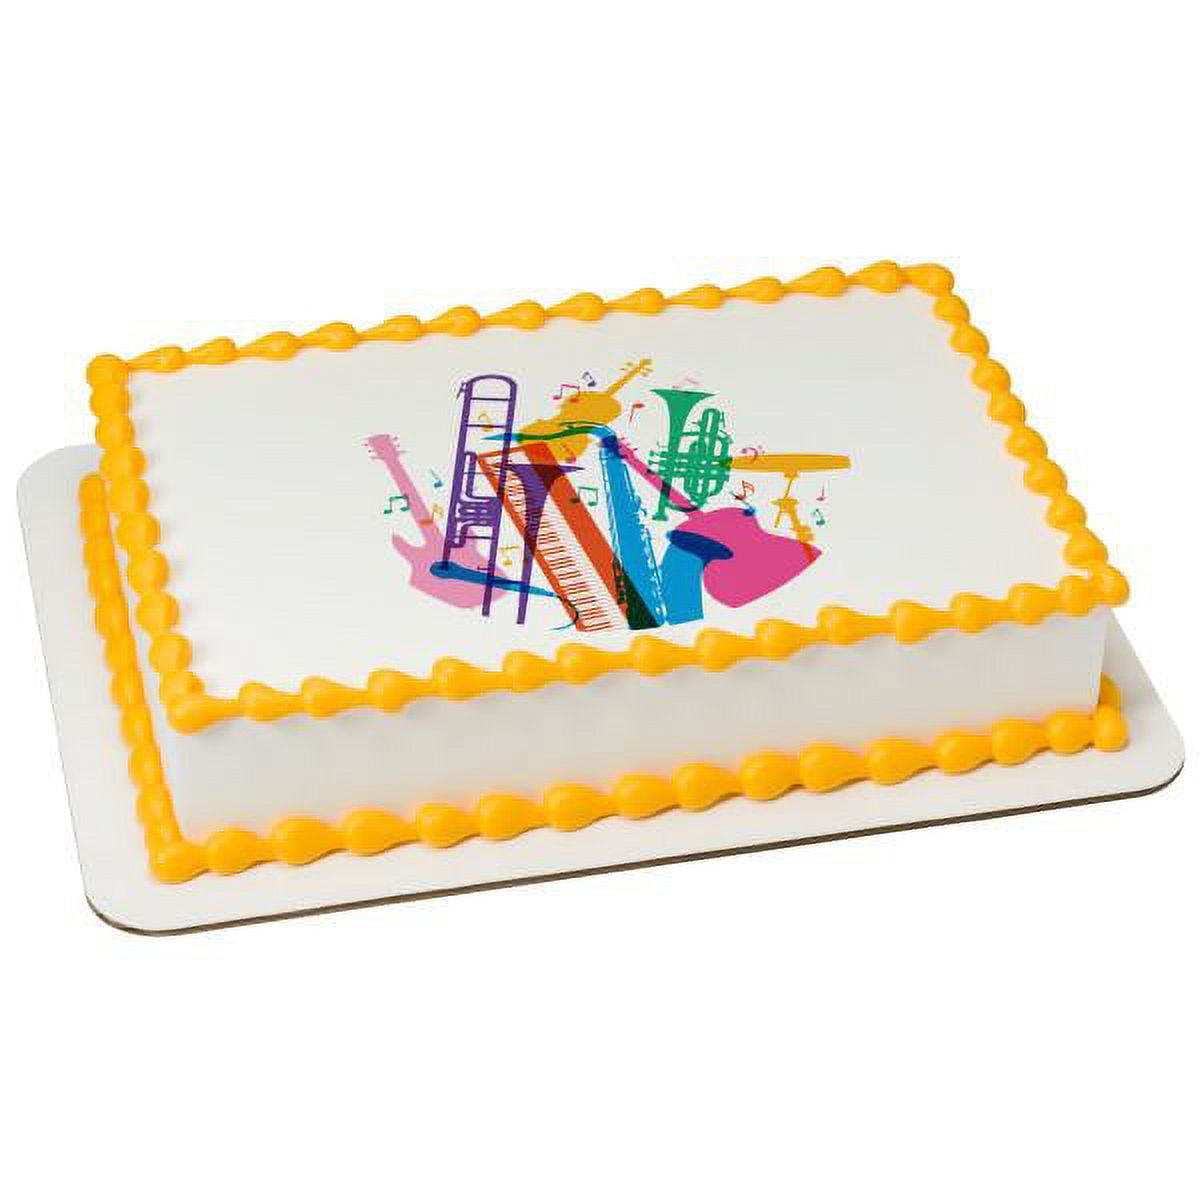 Designer Cakes, Designer Cake Print, Designer Edible Cake Sheets, Edible  Designer Prints, Purse Cakes, Edible Material for purse cake, Luis  Vuitton Cake